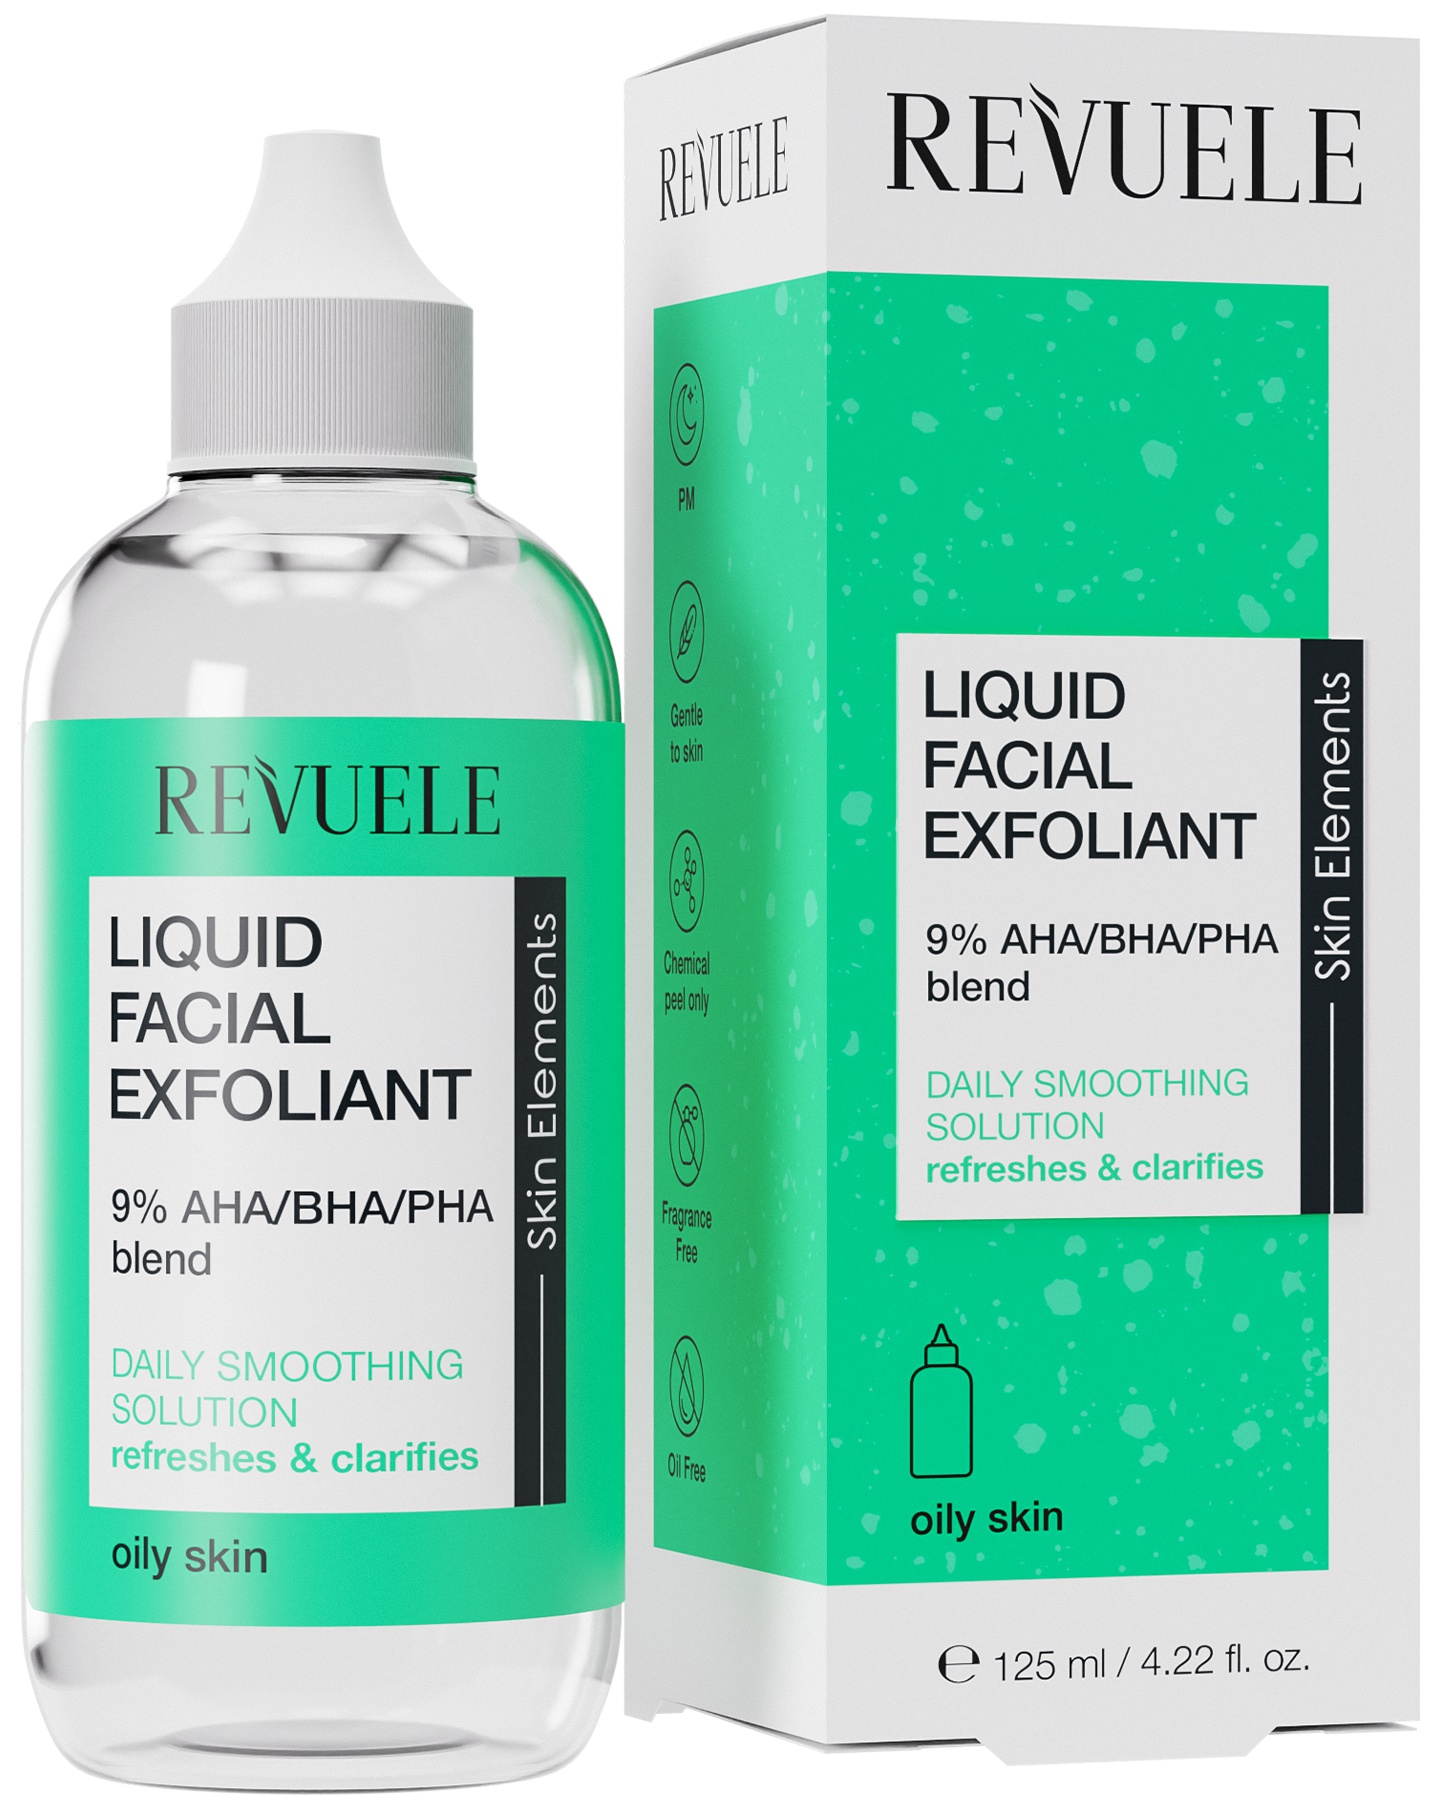 Revuele Liquid Facial Exfoliant 9 % AHA/BHA/PHA Blend